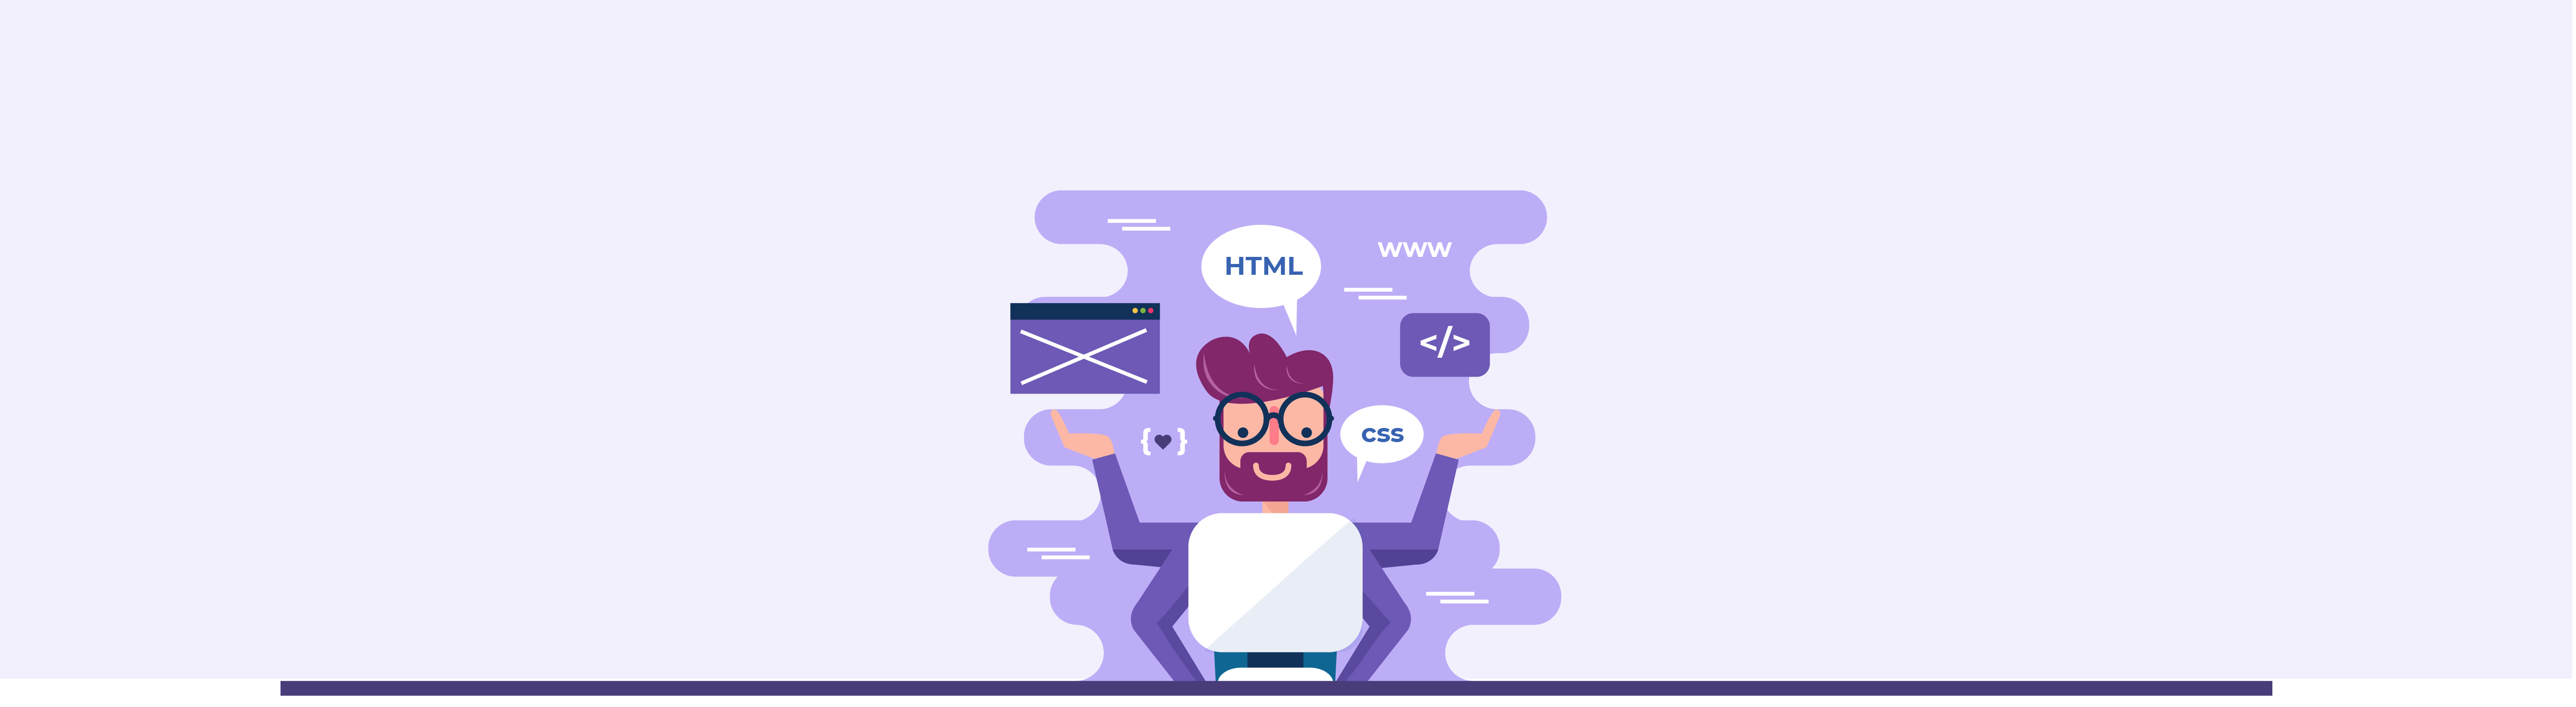 dynamic website development banner image